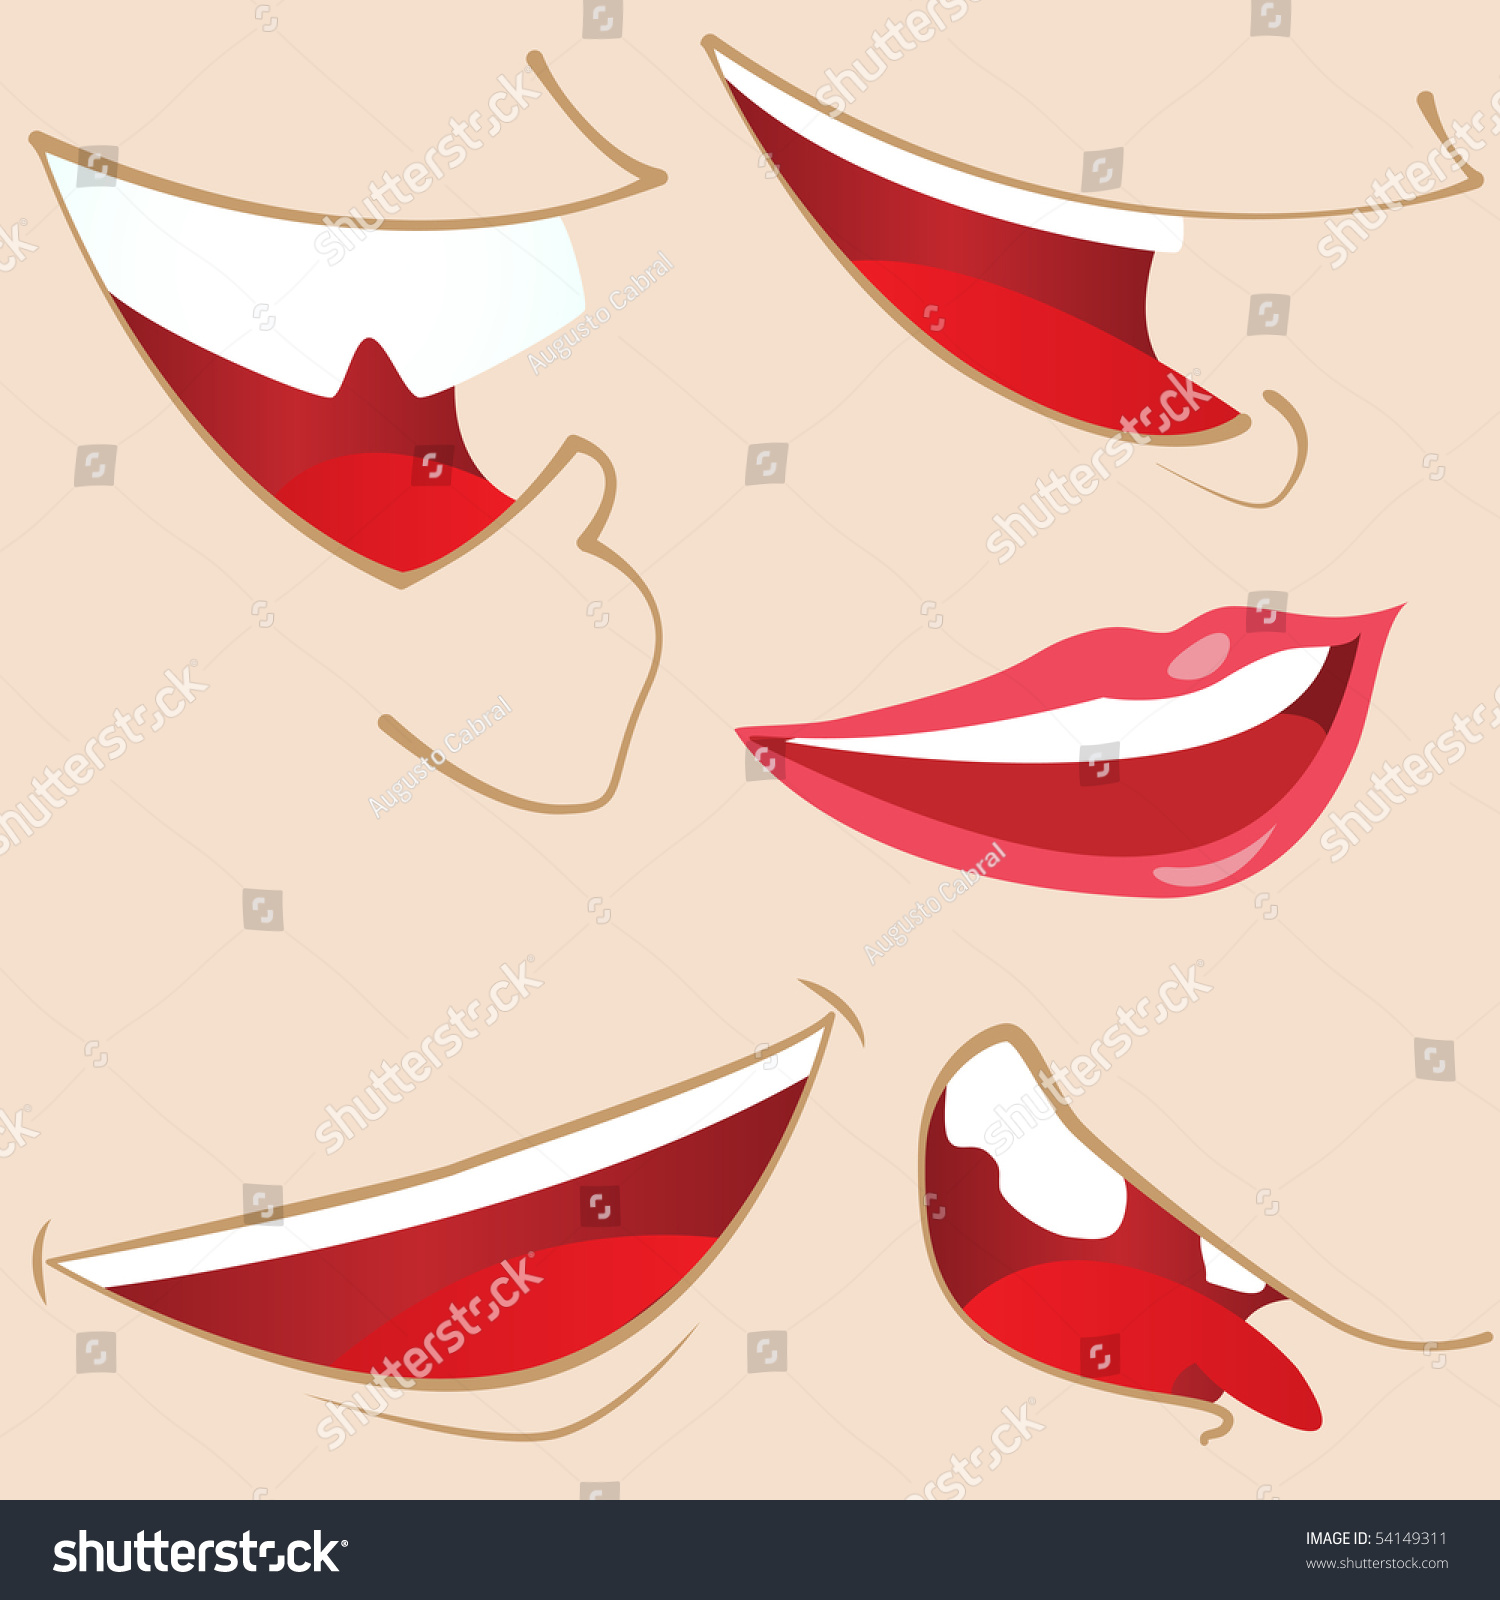 Set Of 5 Cartoon Mouths. Editable Vector Illustration - 54149311